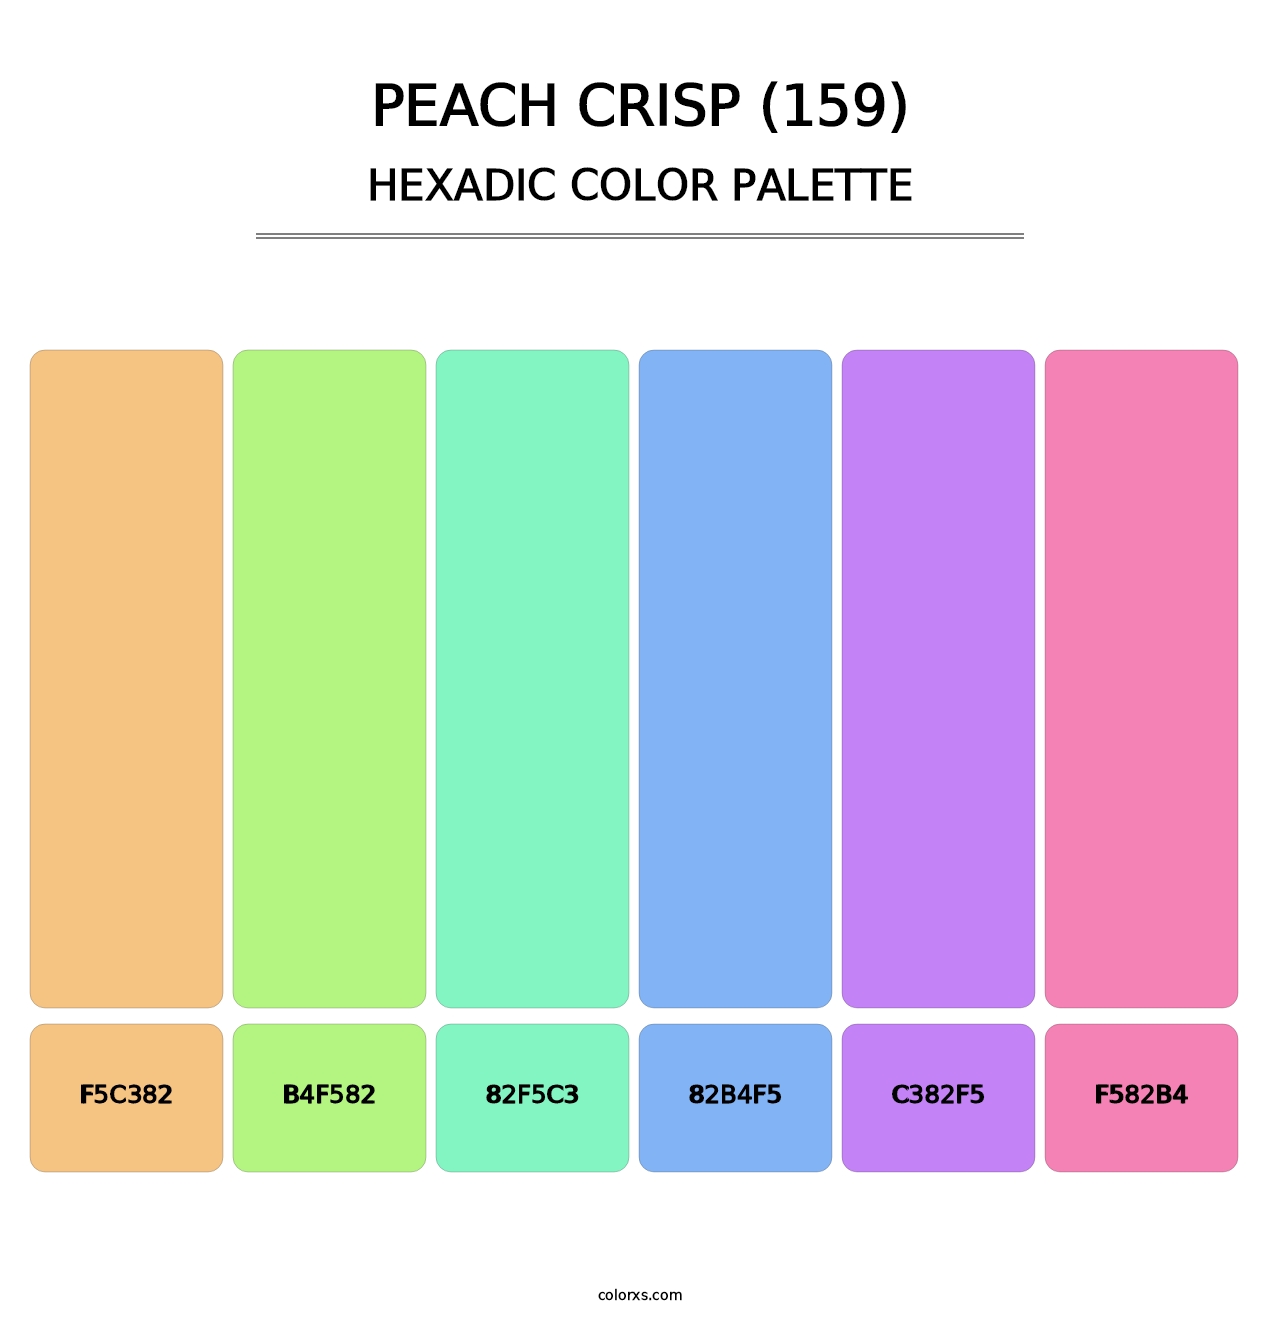 Peach Crisp (159) - Hexadic Color Palette